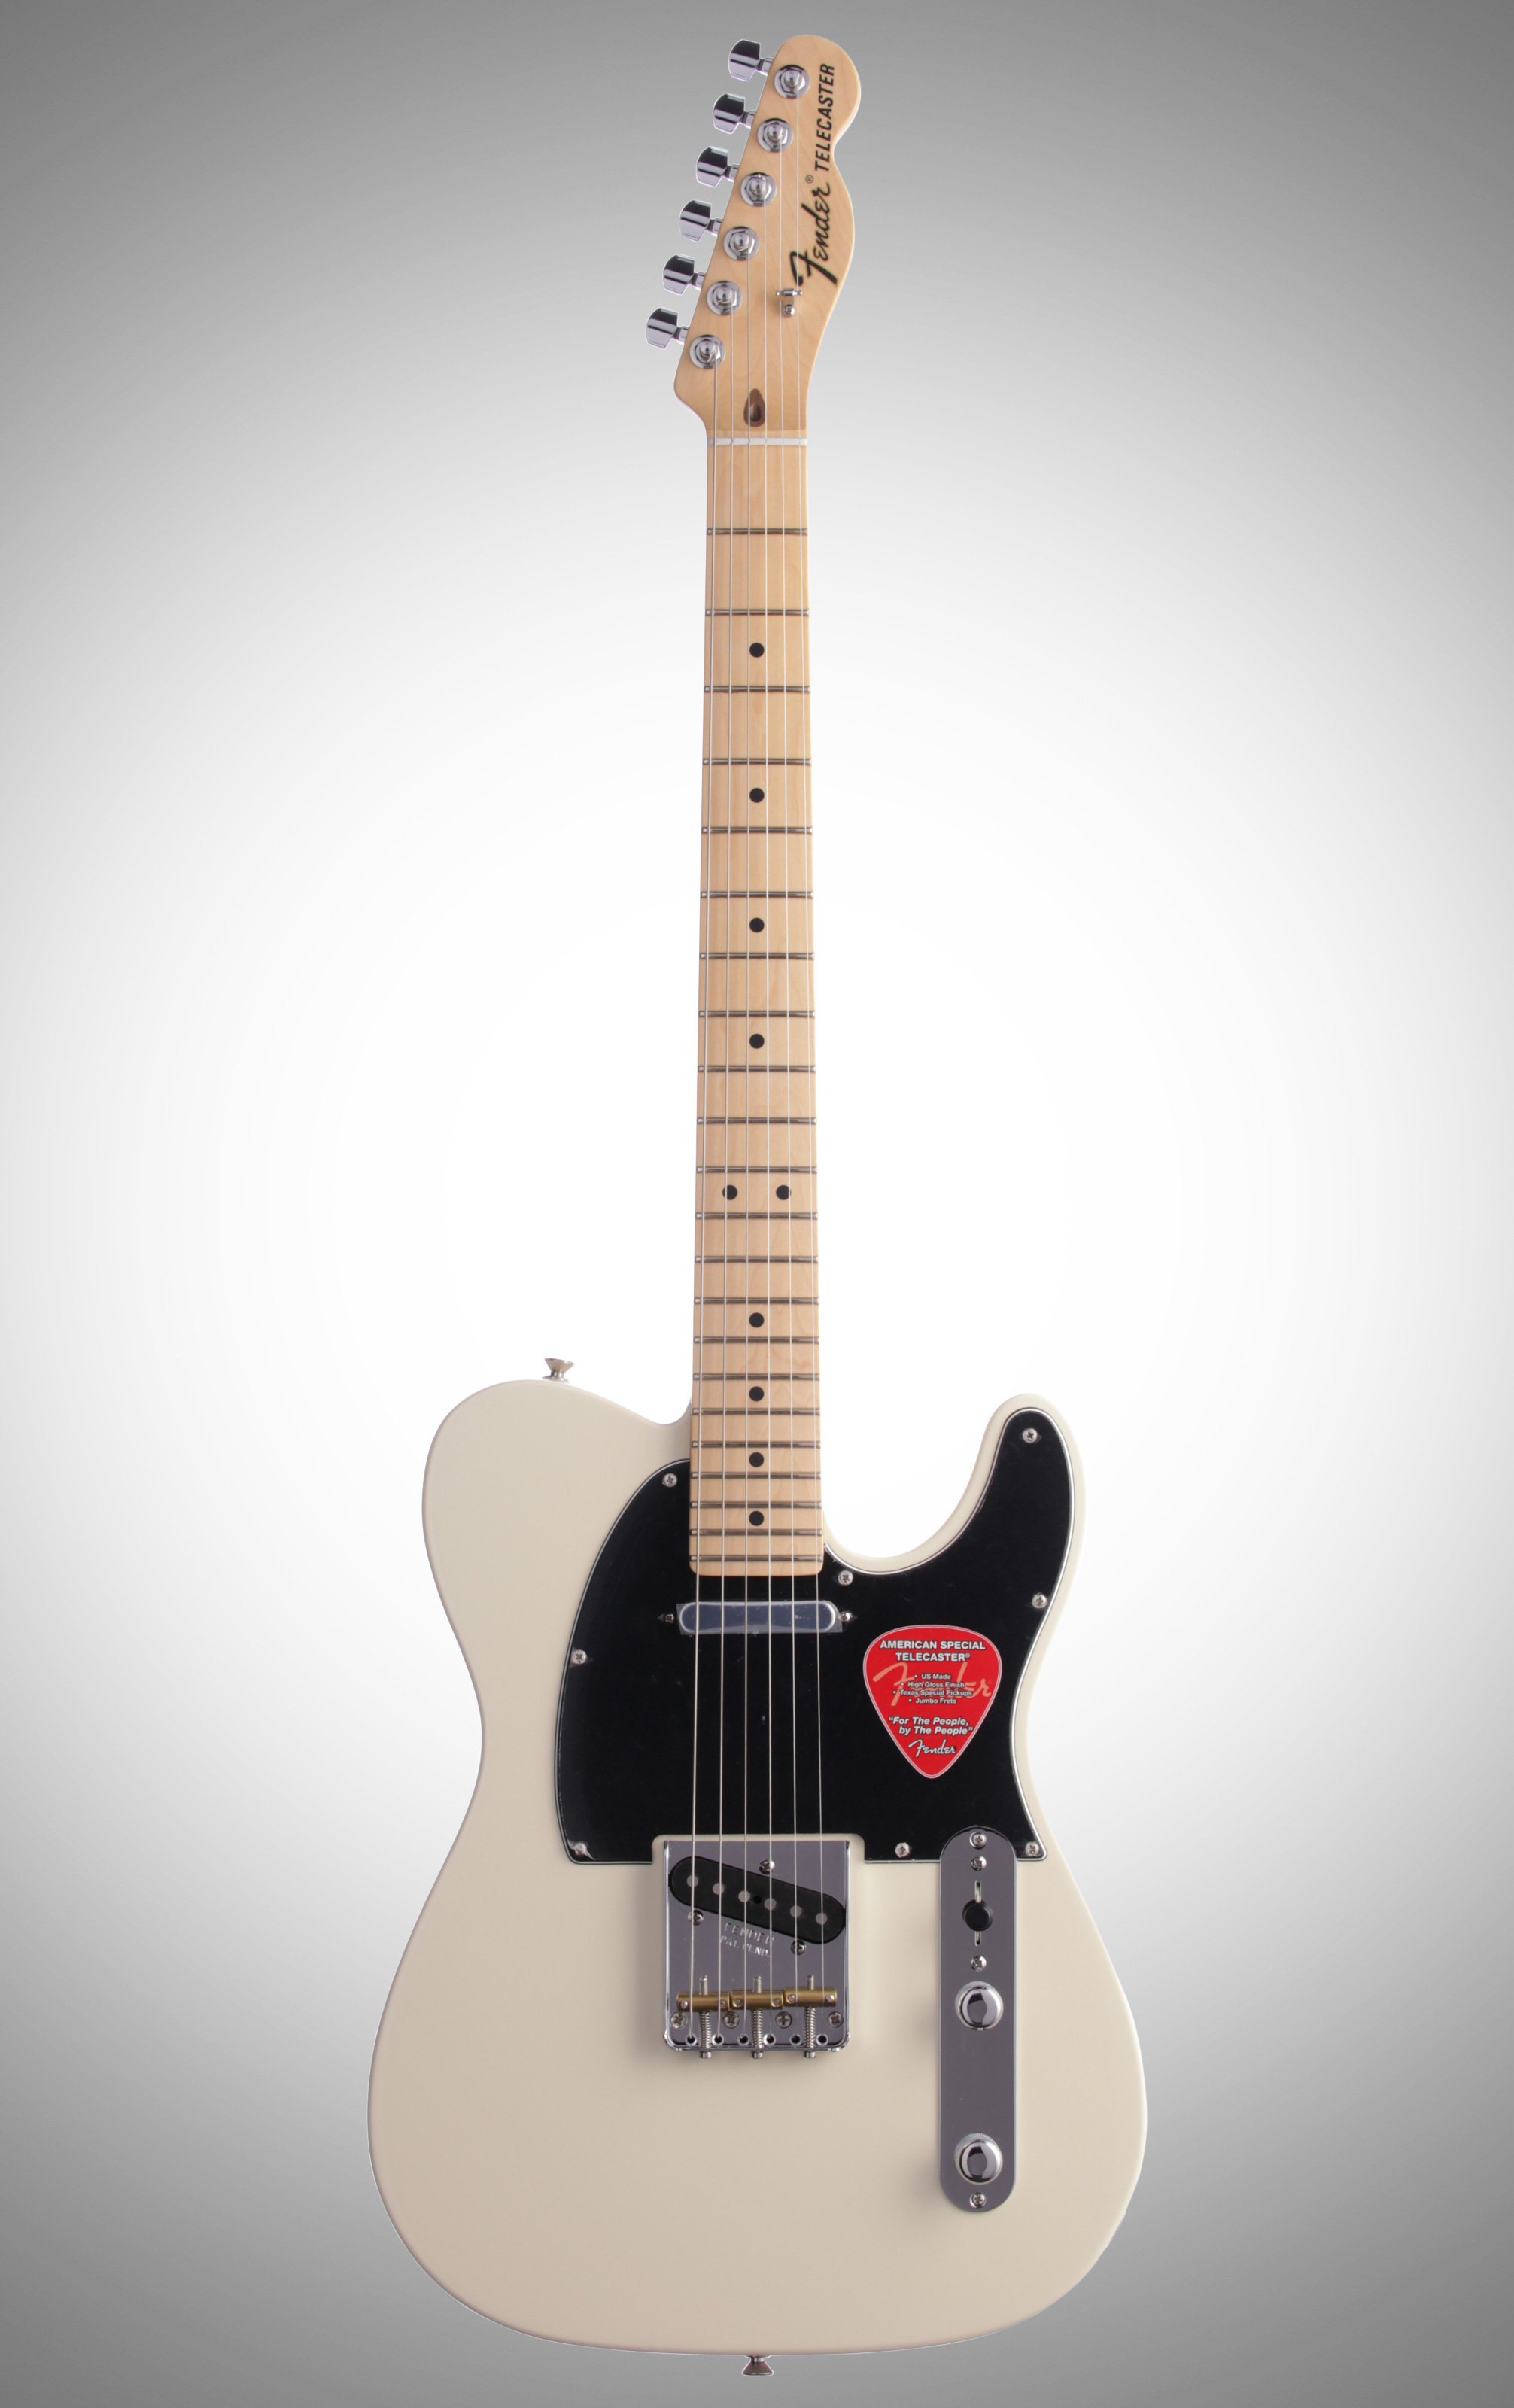 Fender_American_Special_Telecaster_Electric_Guitar_拨片网_电吉他.jpg